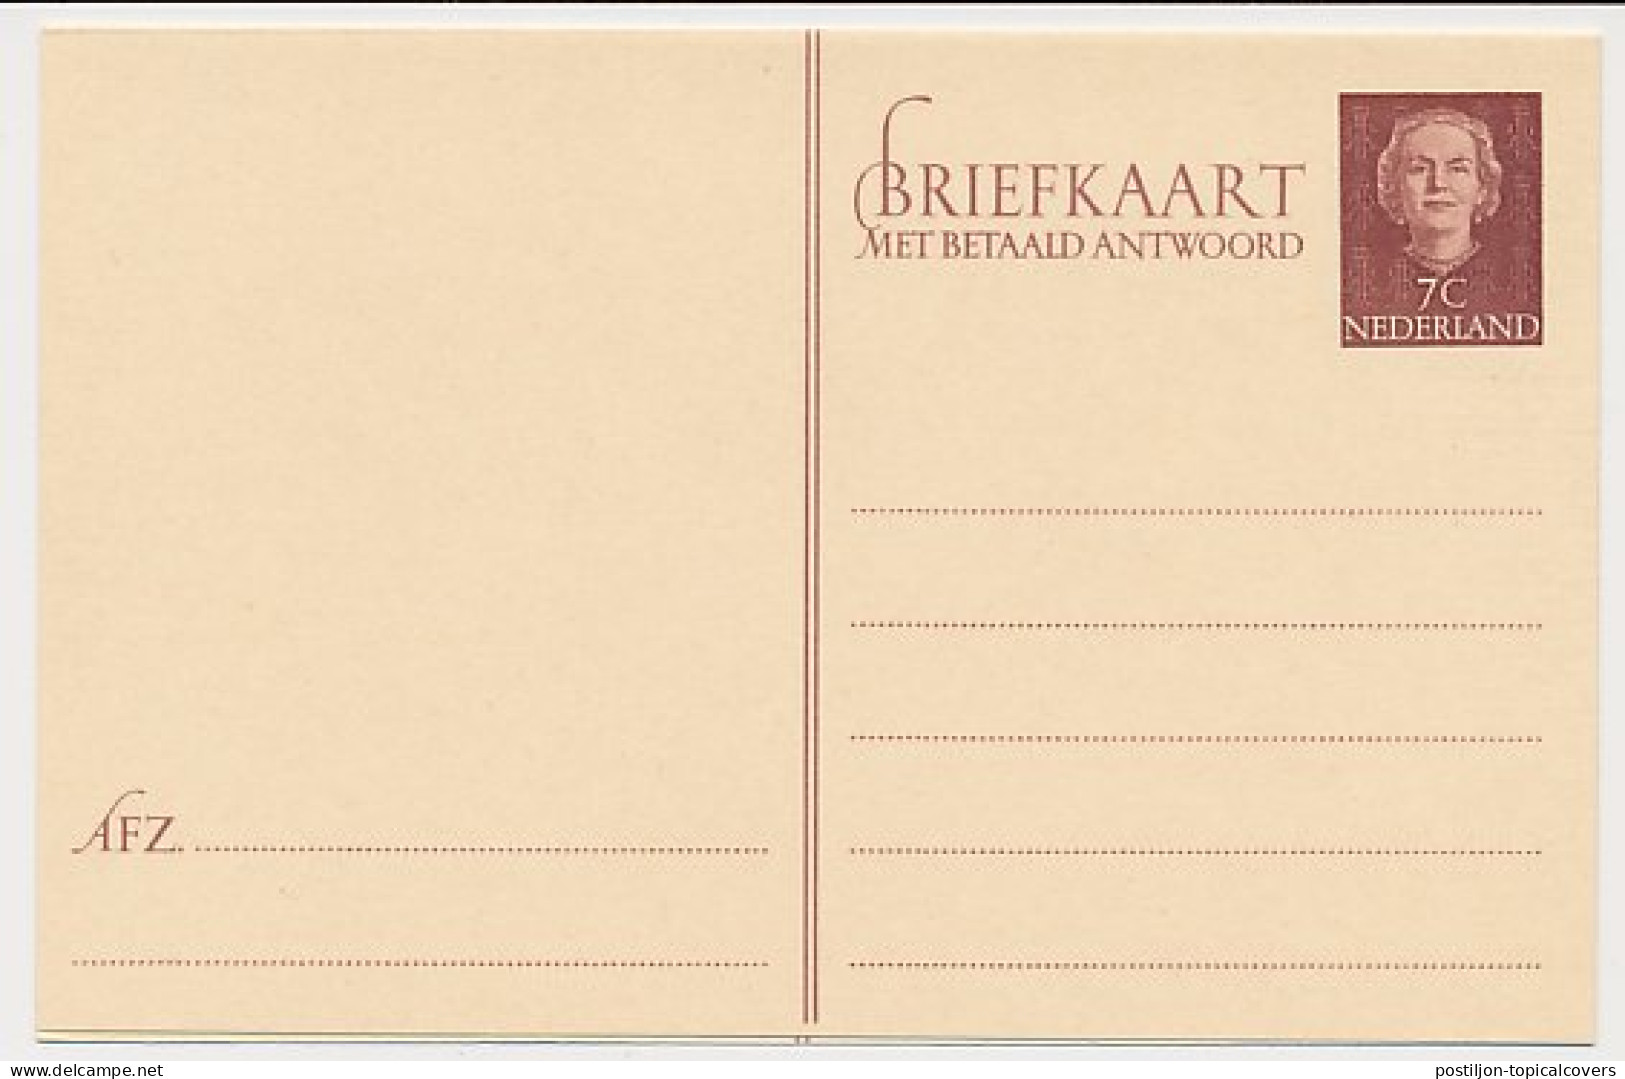 Briefkaart G. 310 - Postal Stationery